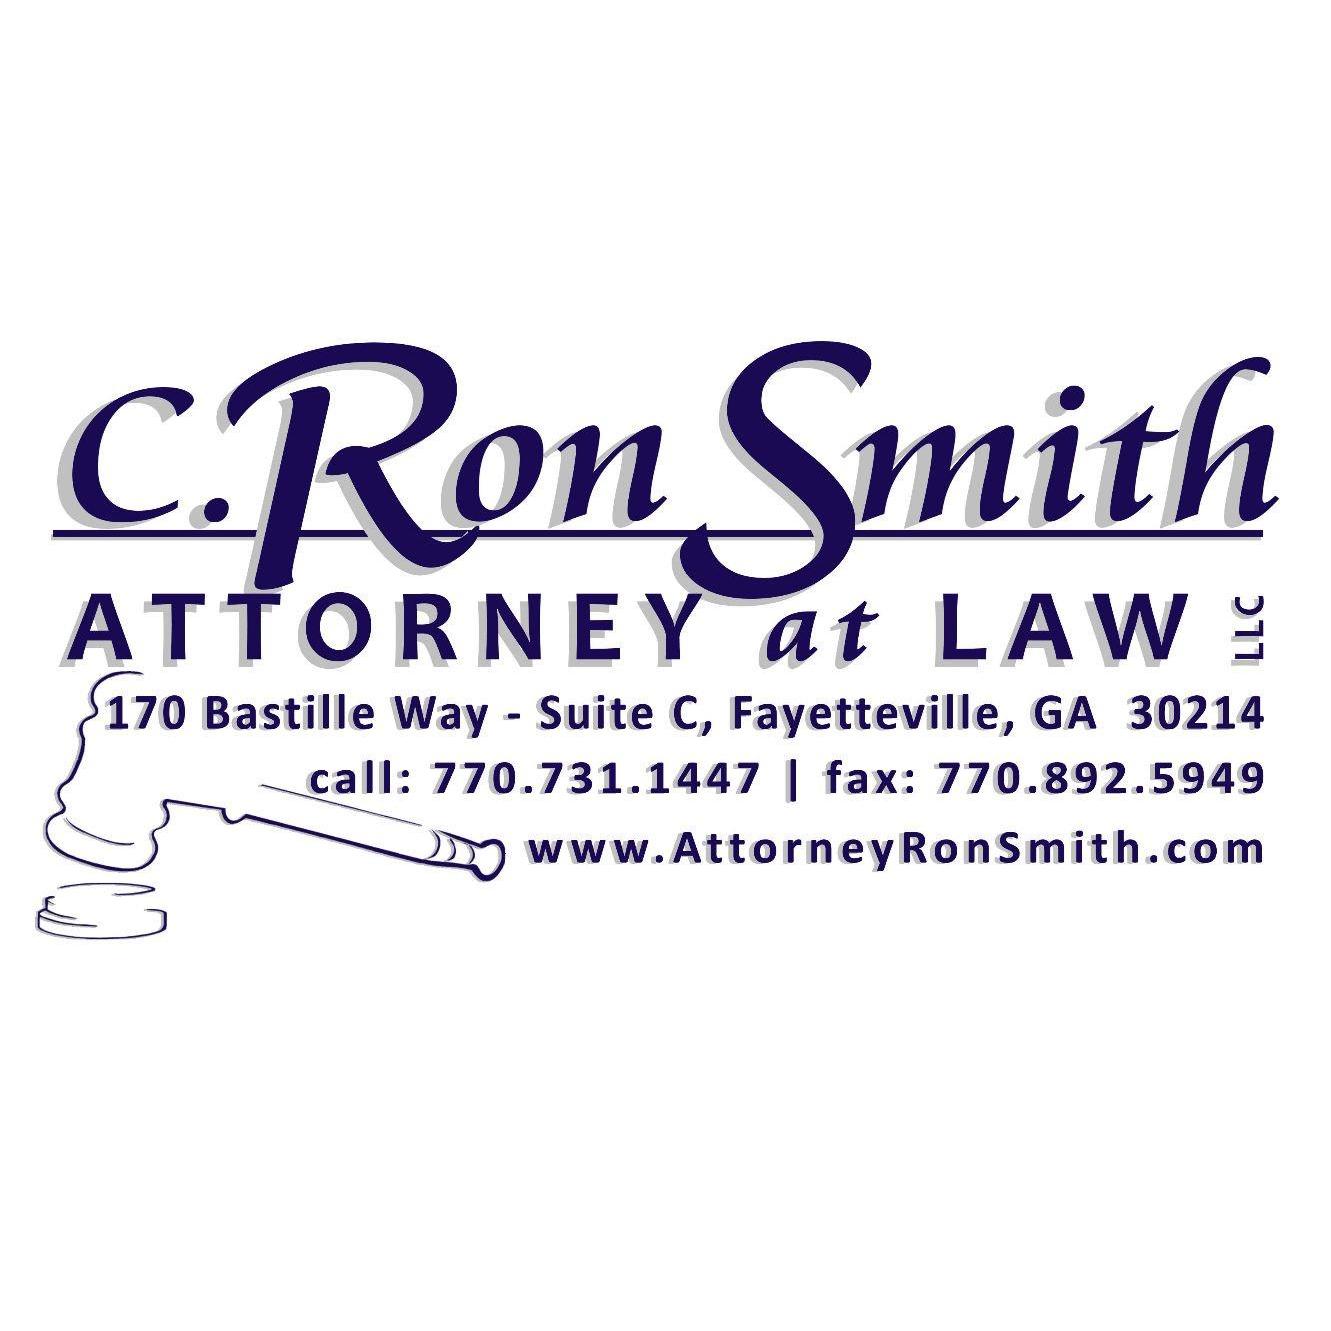 C. Ron Smith Attorney at Law, LLC Logo